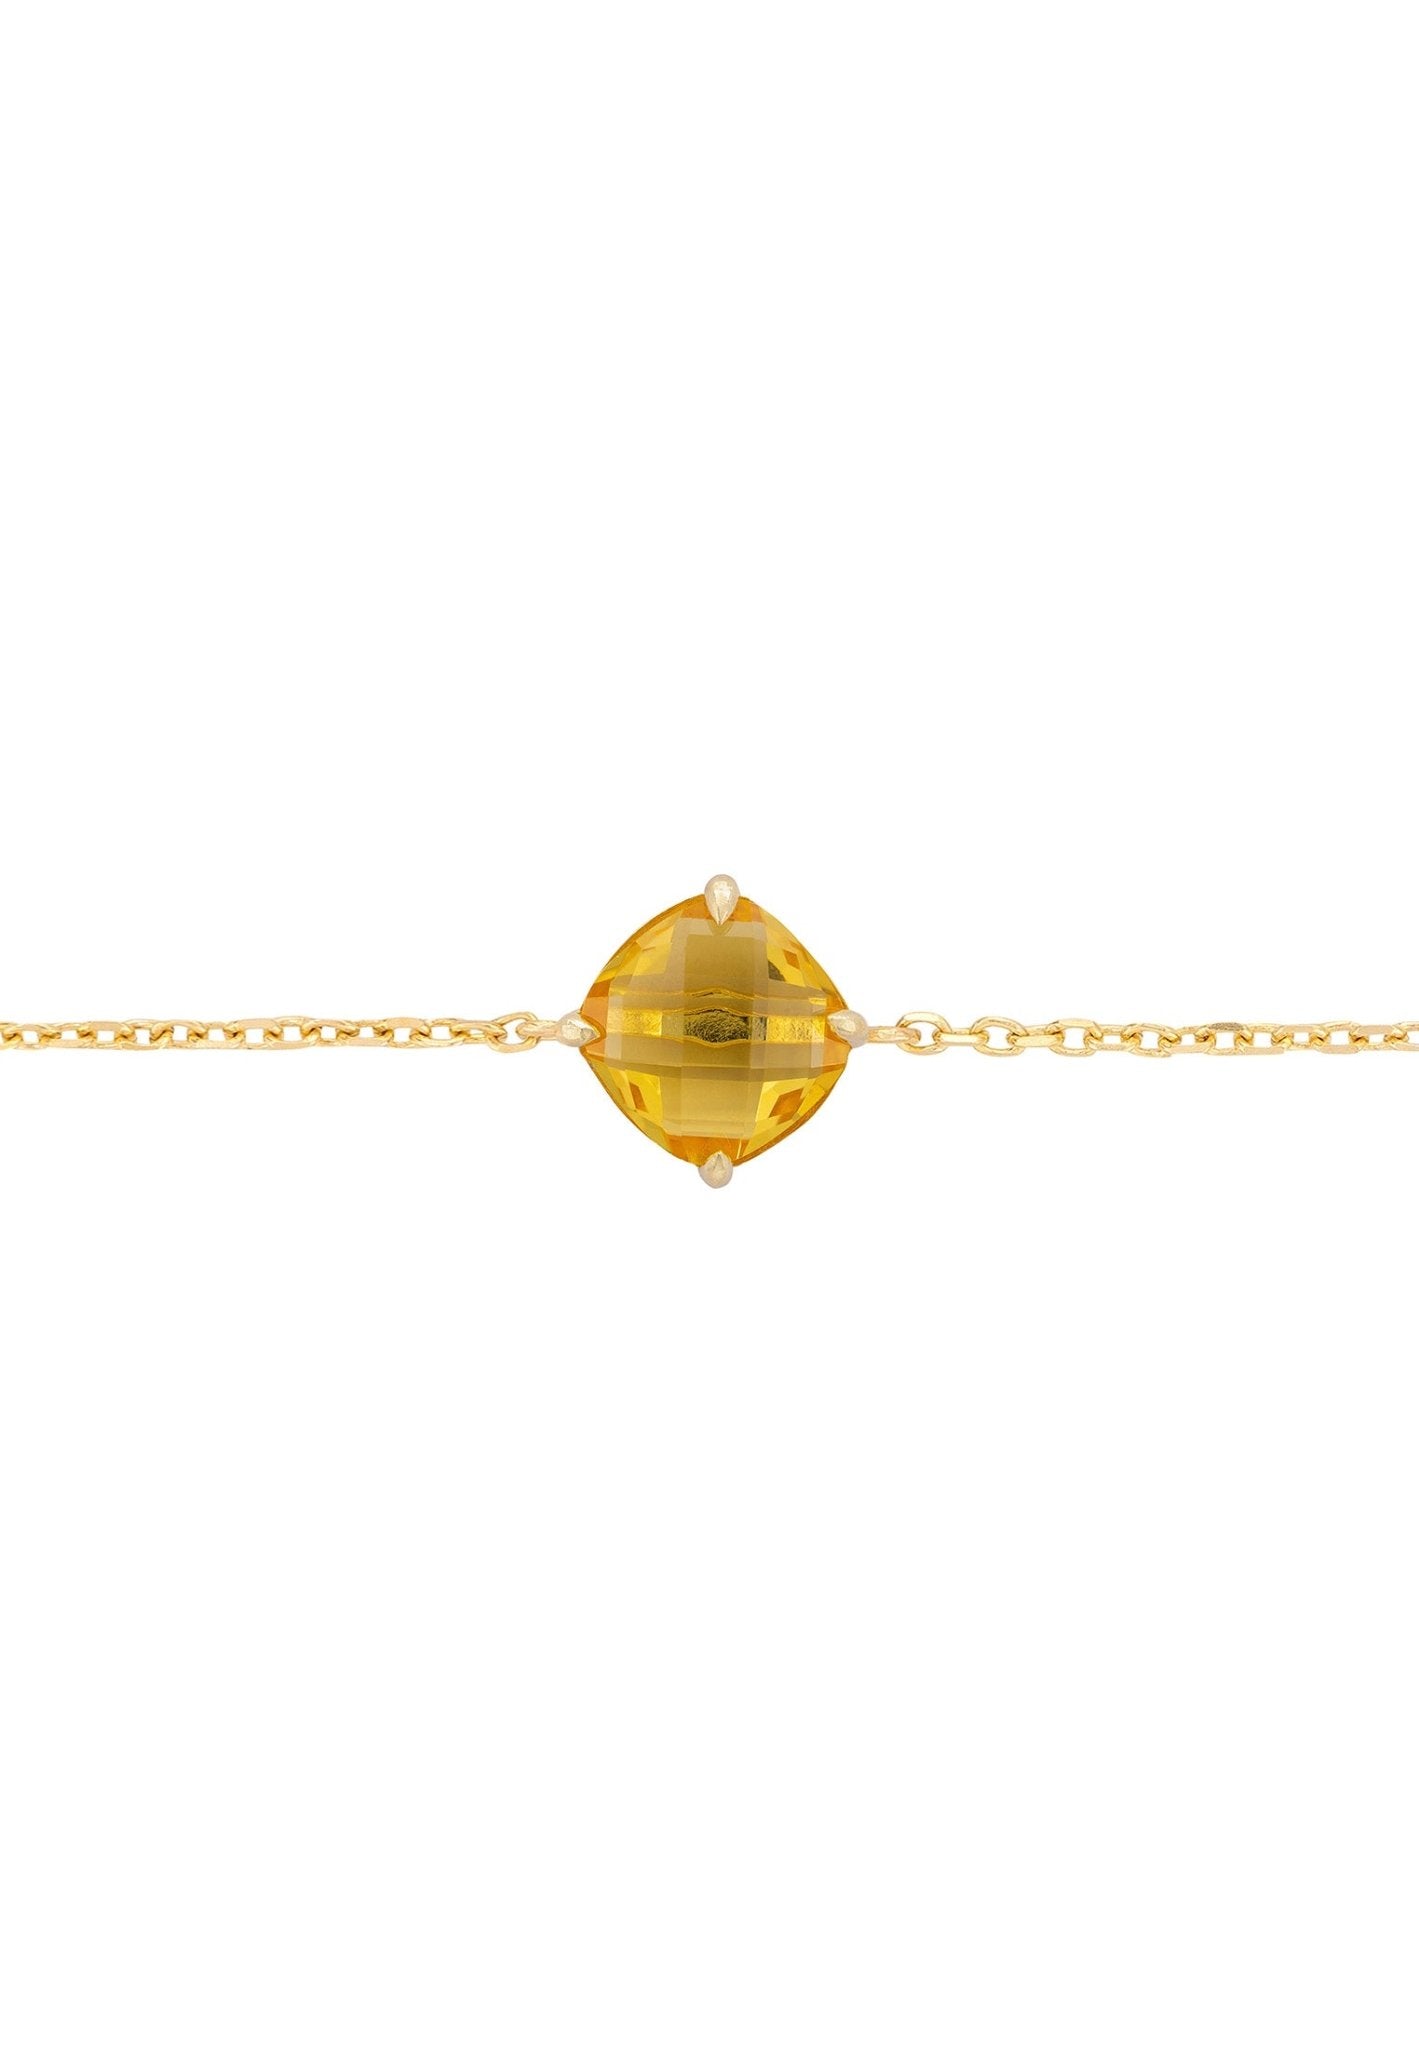 Empress Gemstone Bracelet Gold Citrine - LATELITA Bracelets